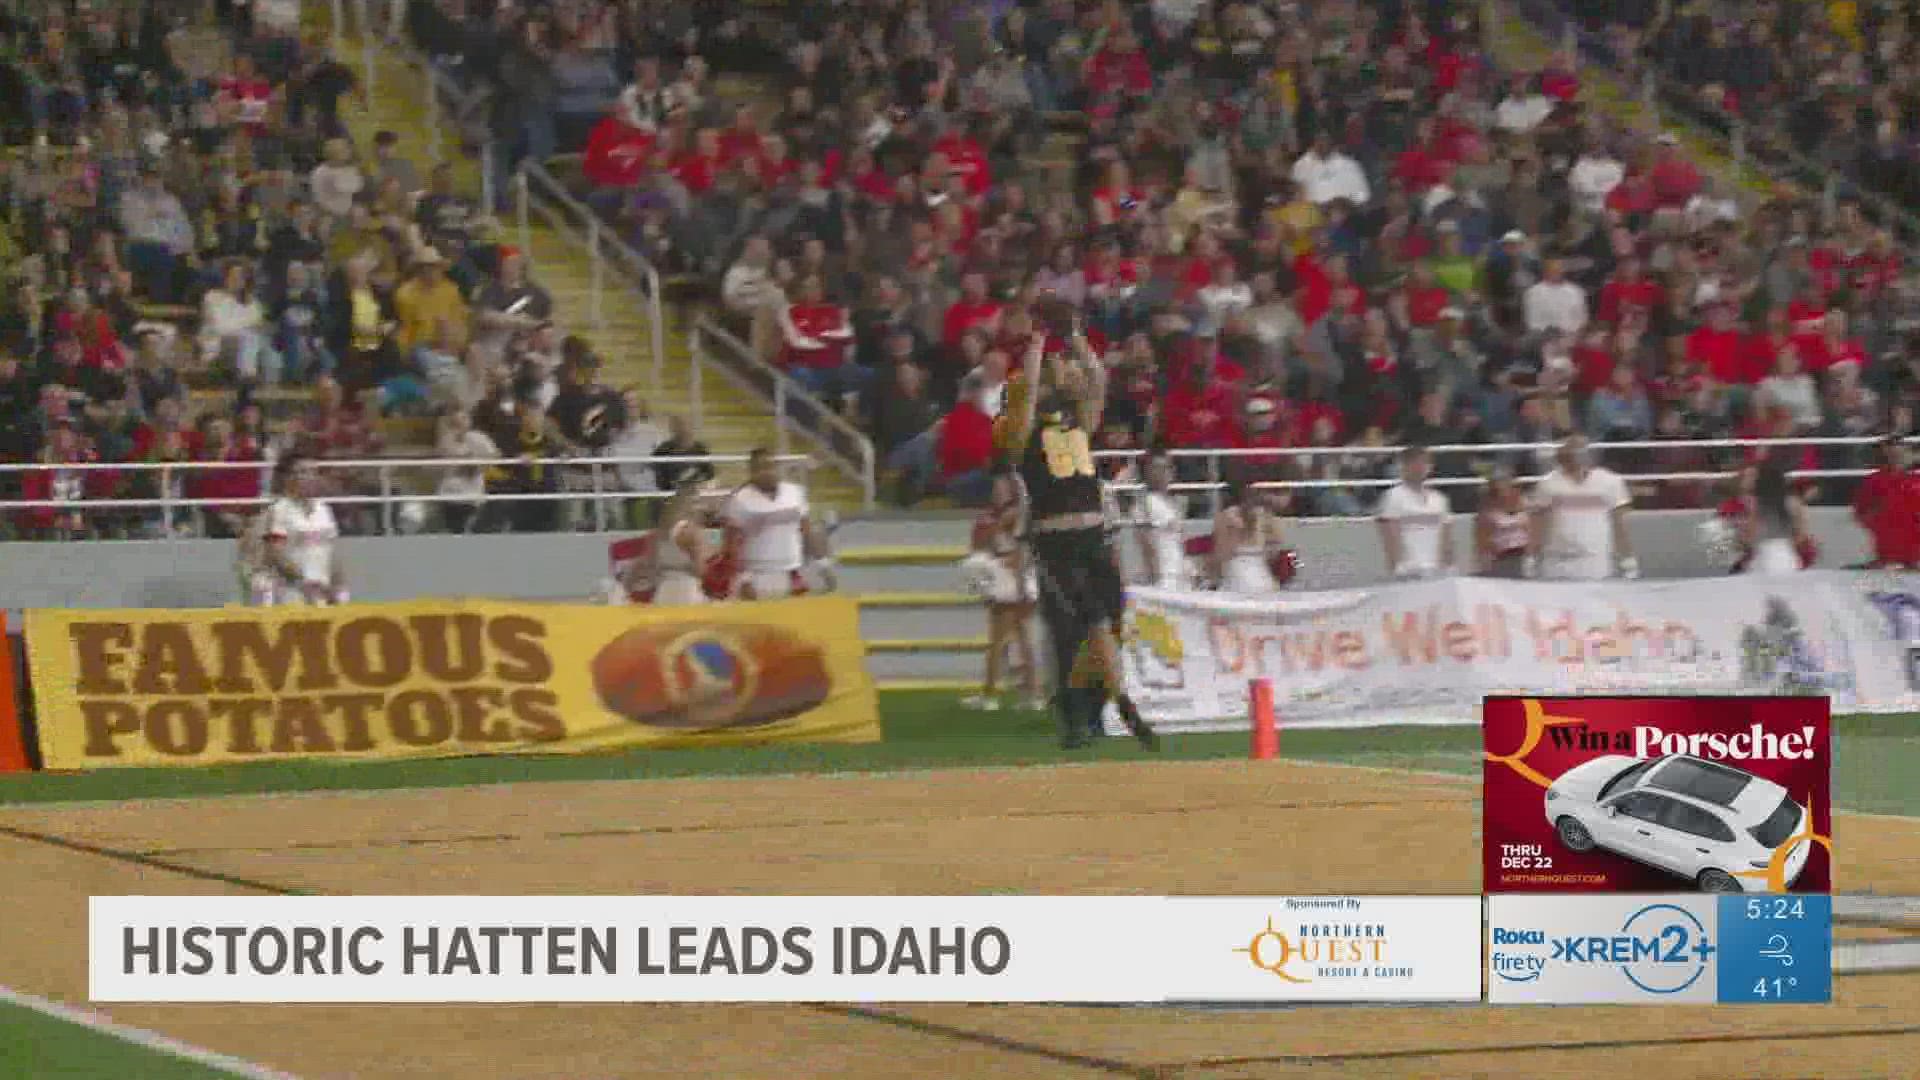 Hatten has four receiving touchdowns in the first half as Idaho dominates Eastern Washington.